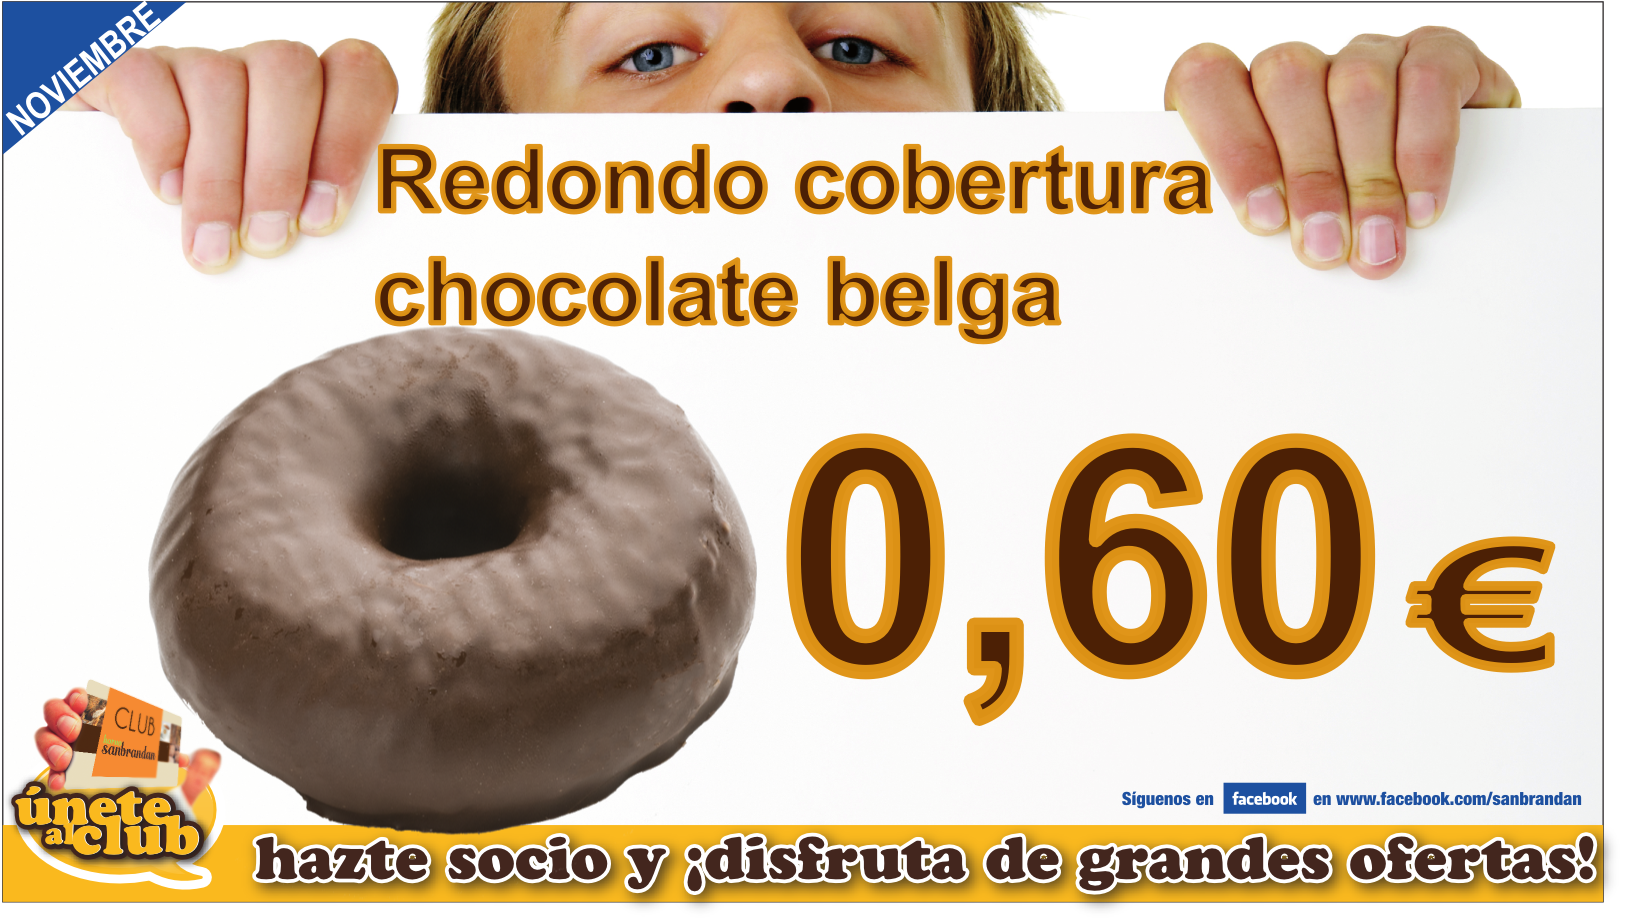 Redondo cobertura de chocolate belga por 0,60 €